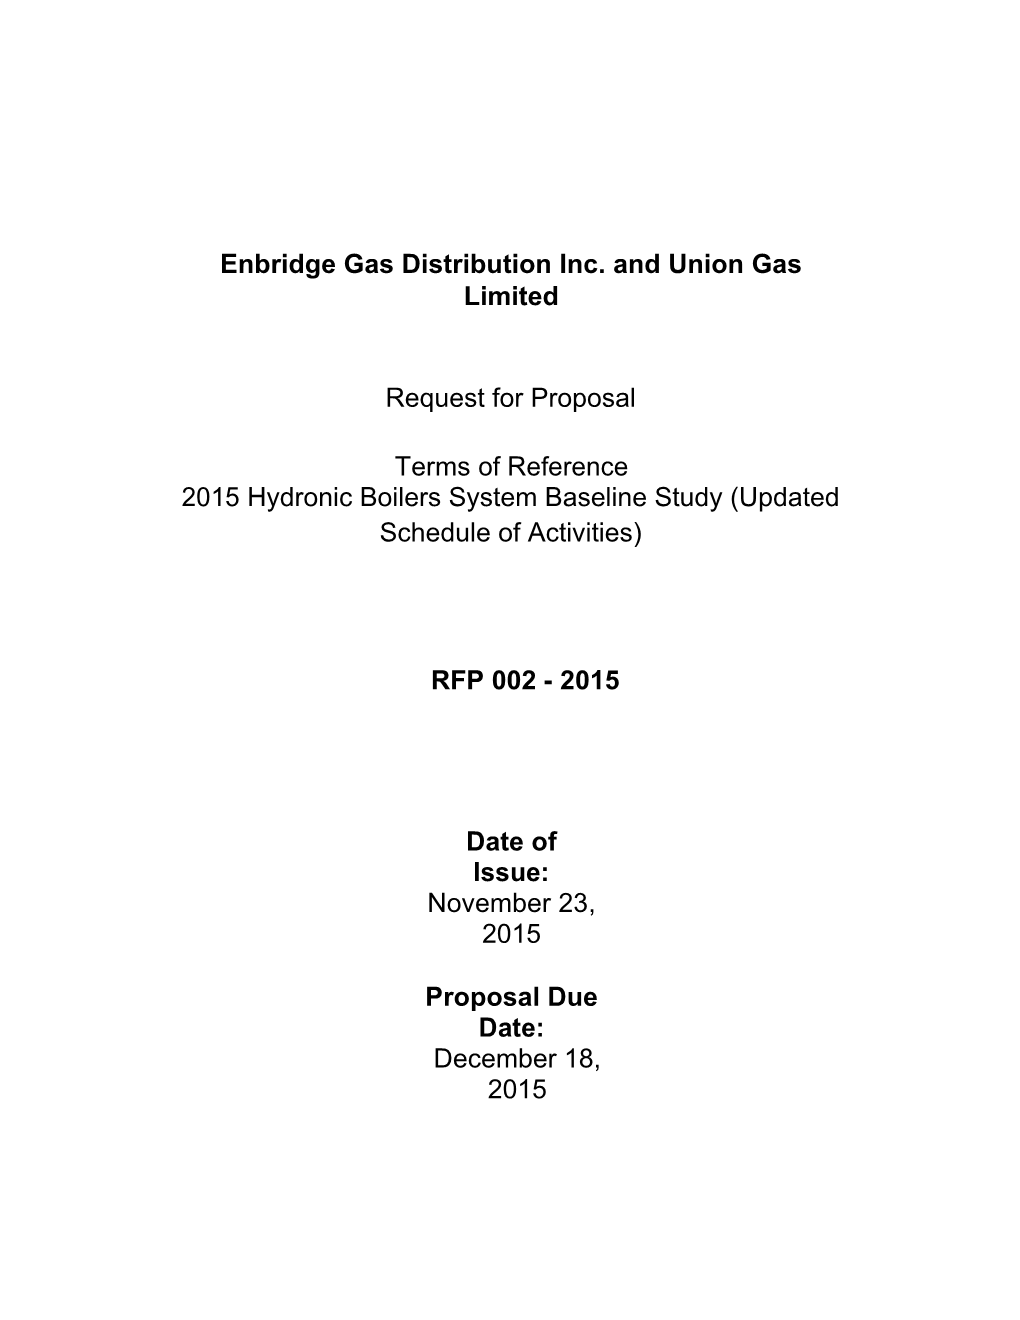 Enbridge Gas Distribution Inc. and Union Gas Limited